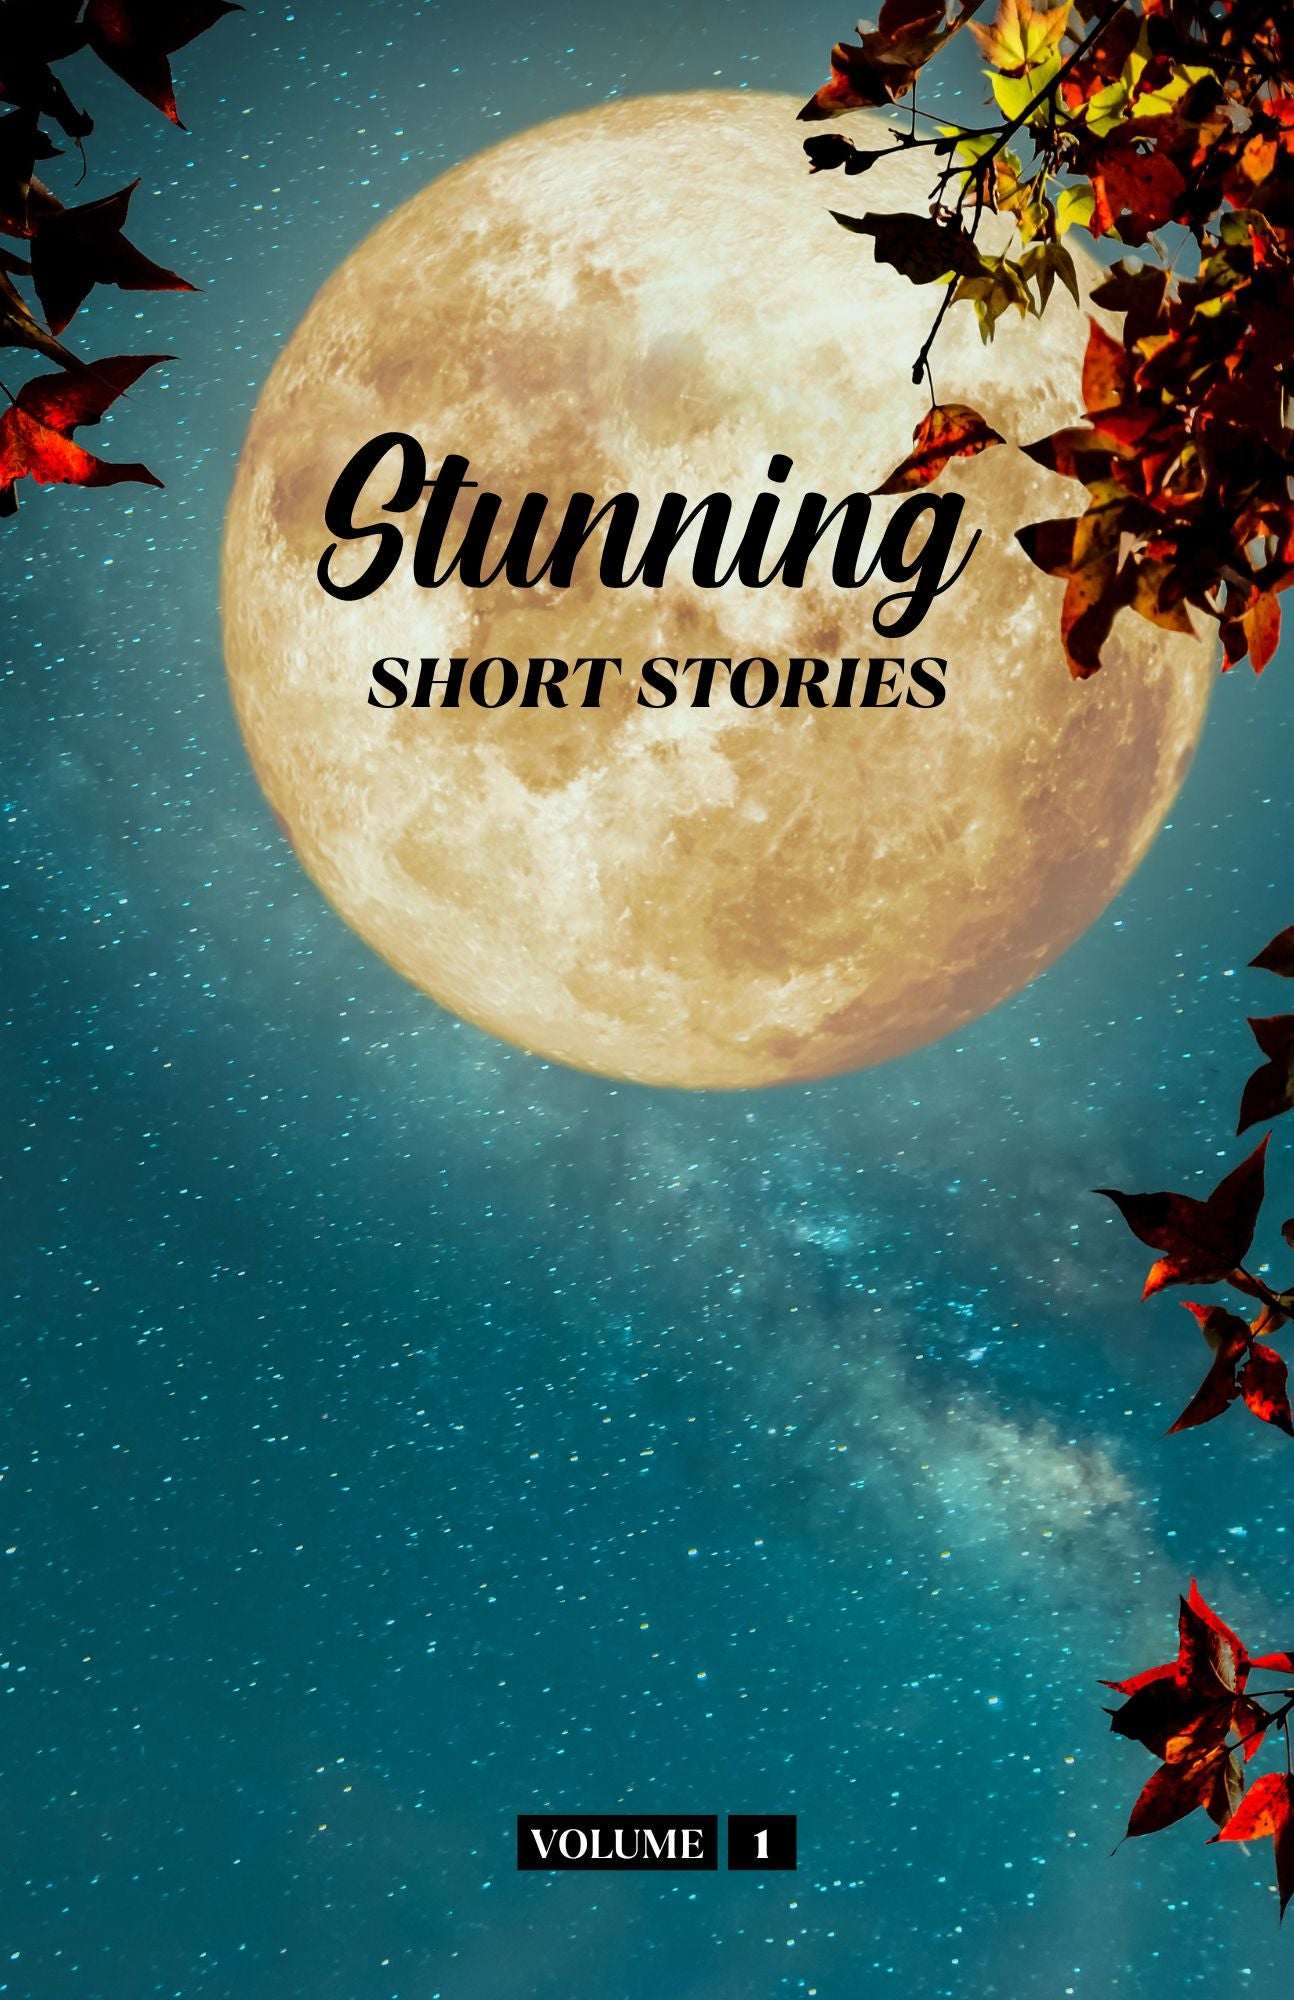 Stunning Short Stories Volume 1 (Physical Book)